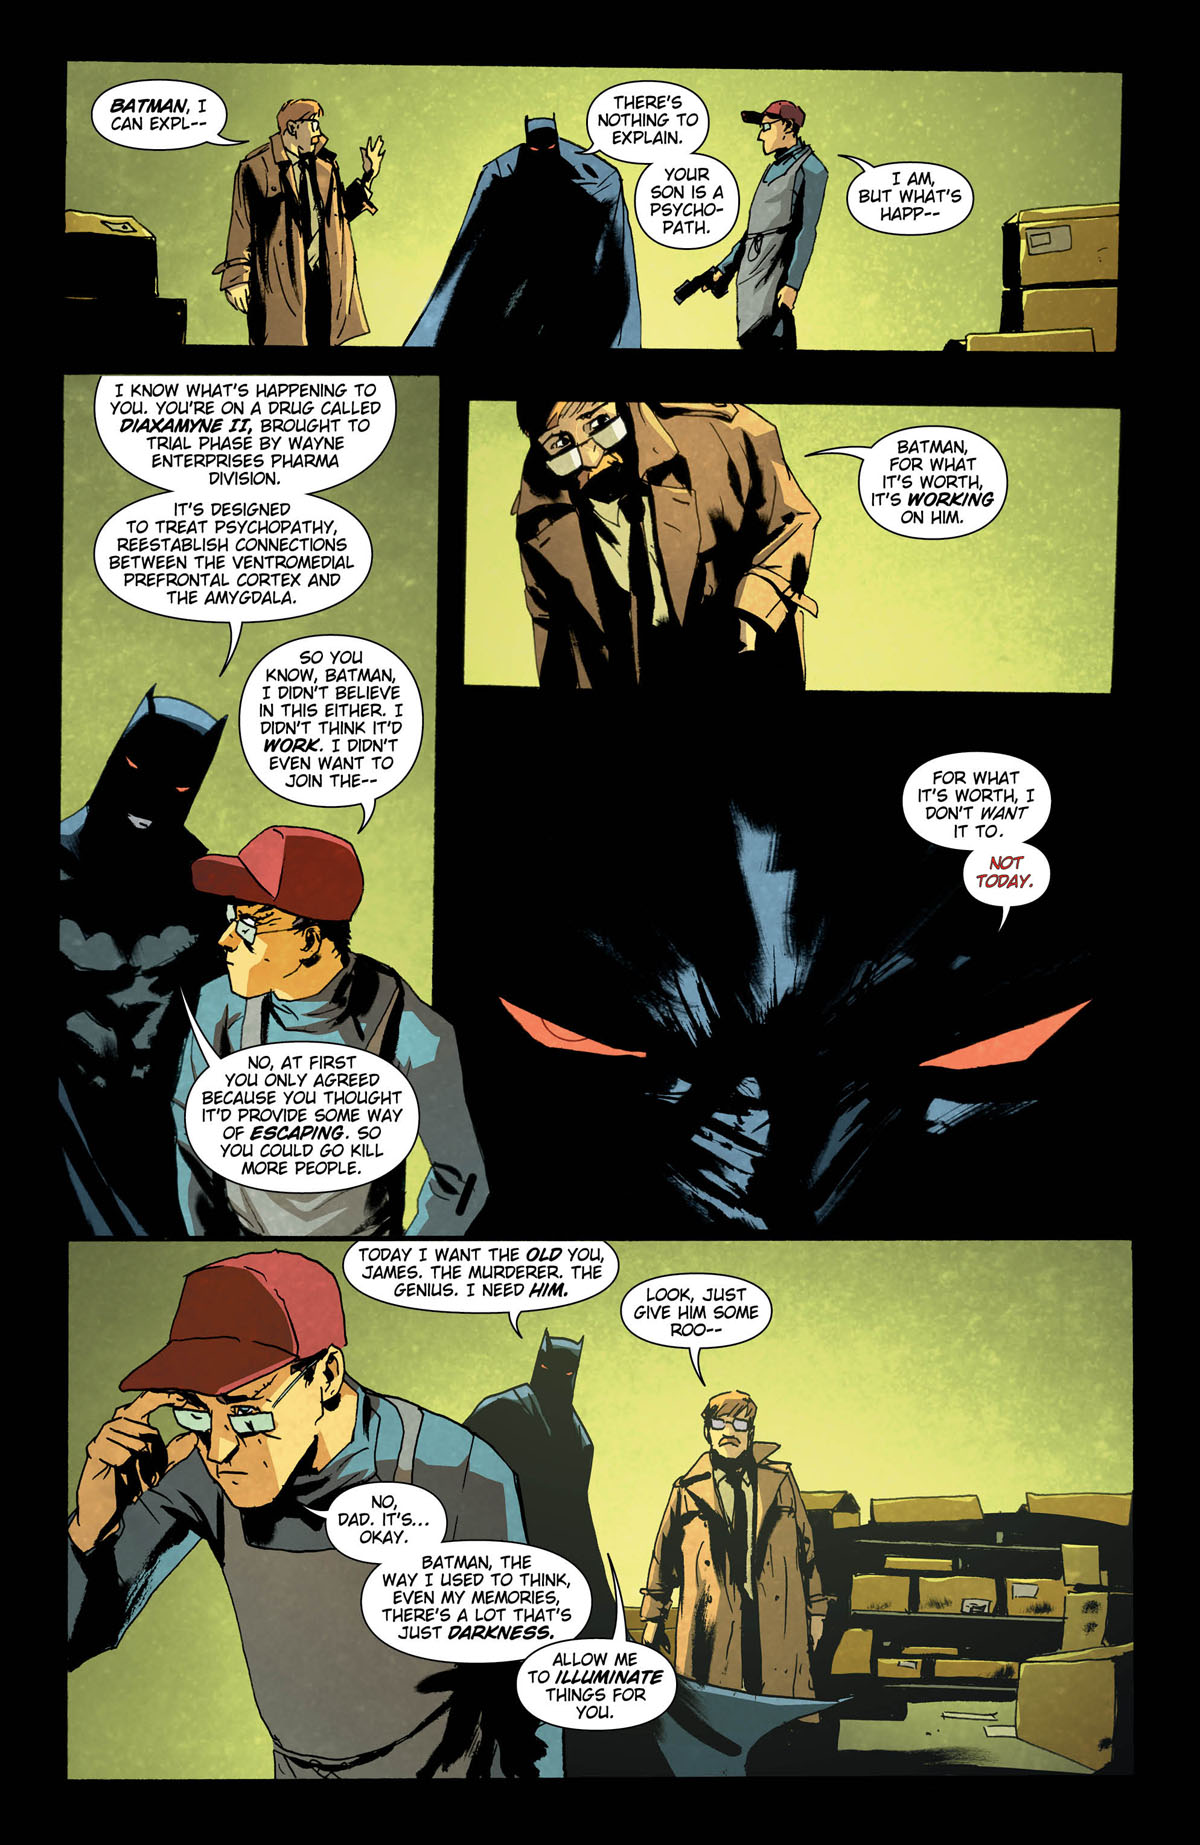 The Batman Who Laughs #3 page 4